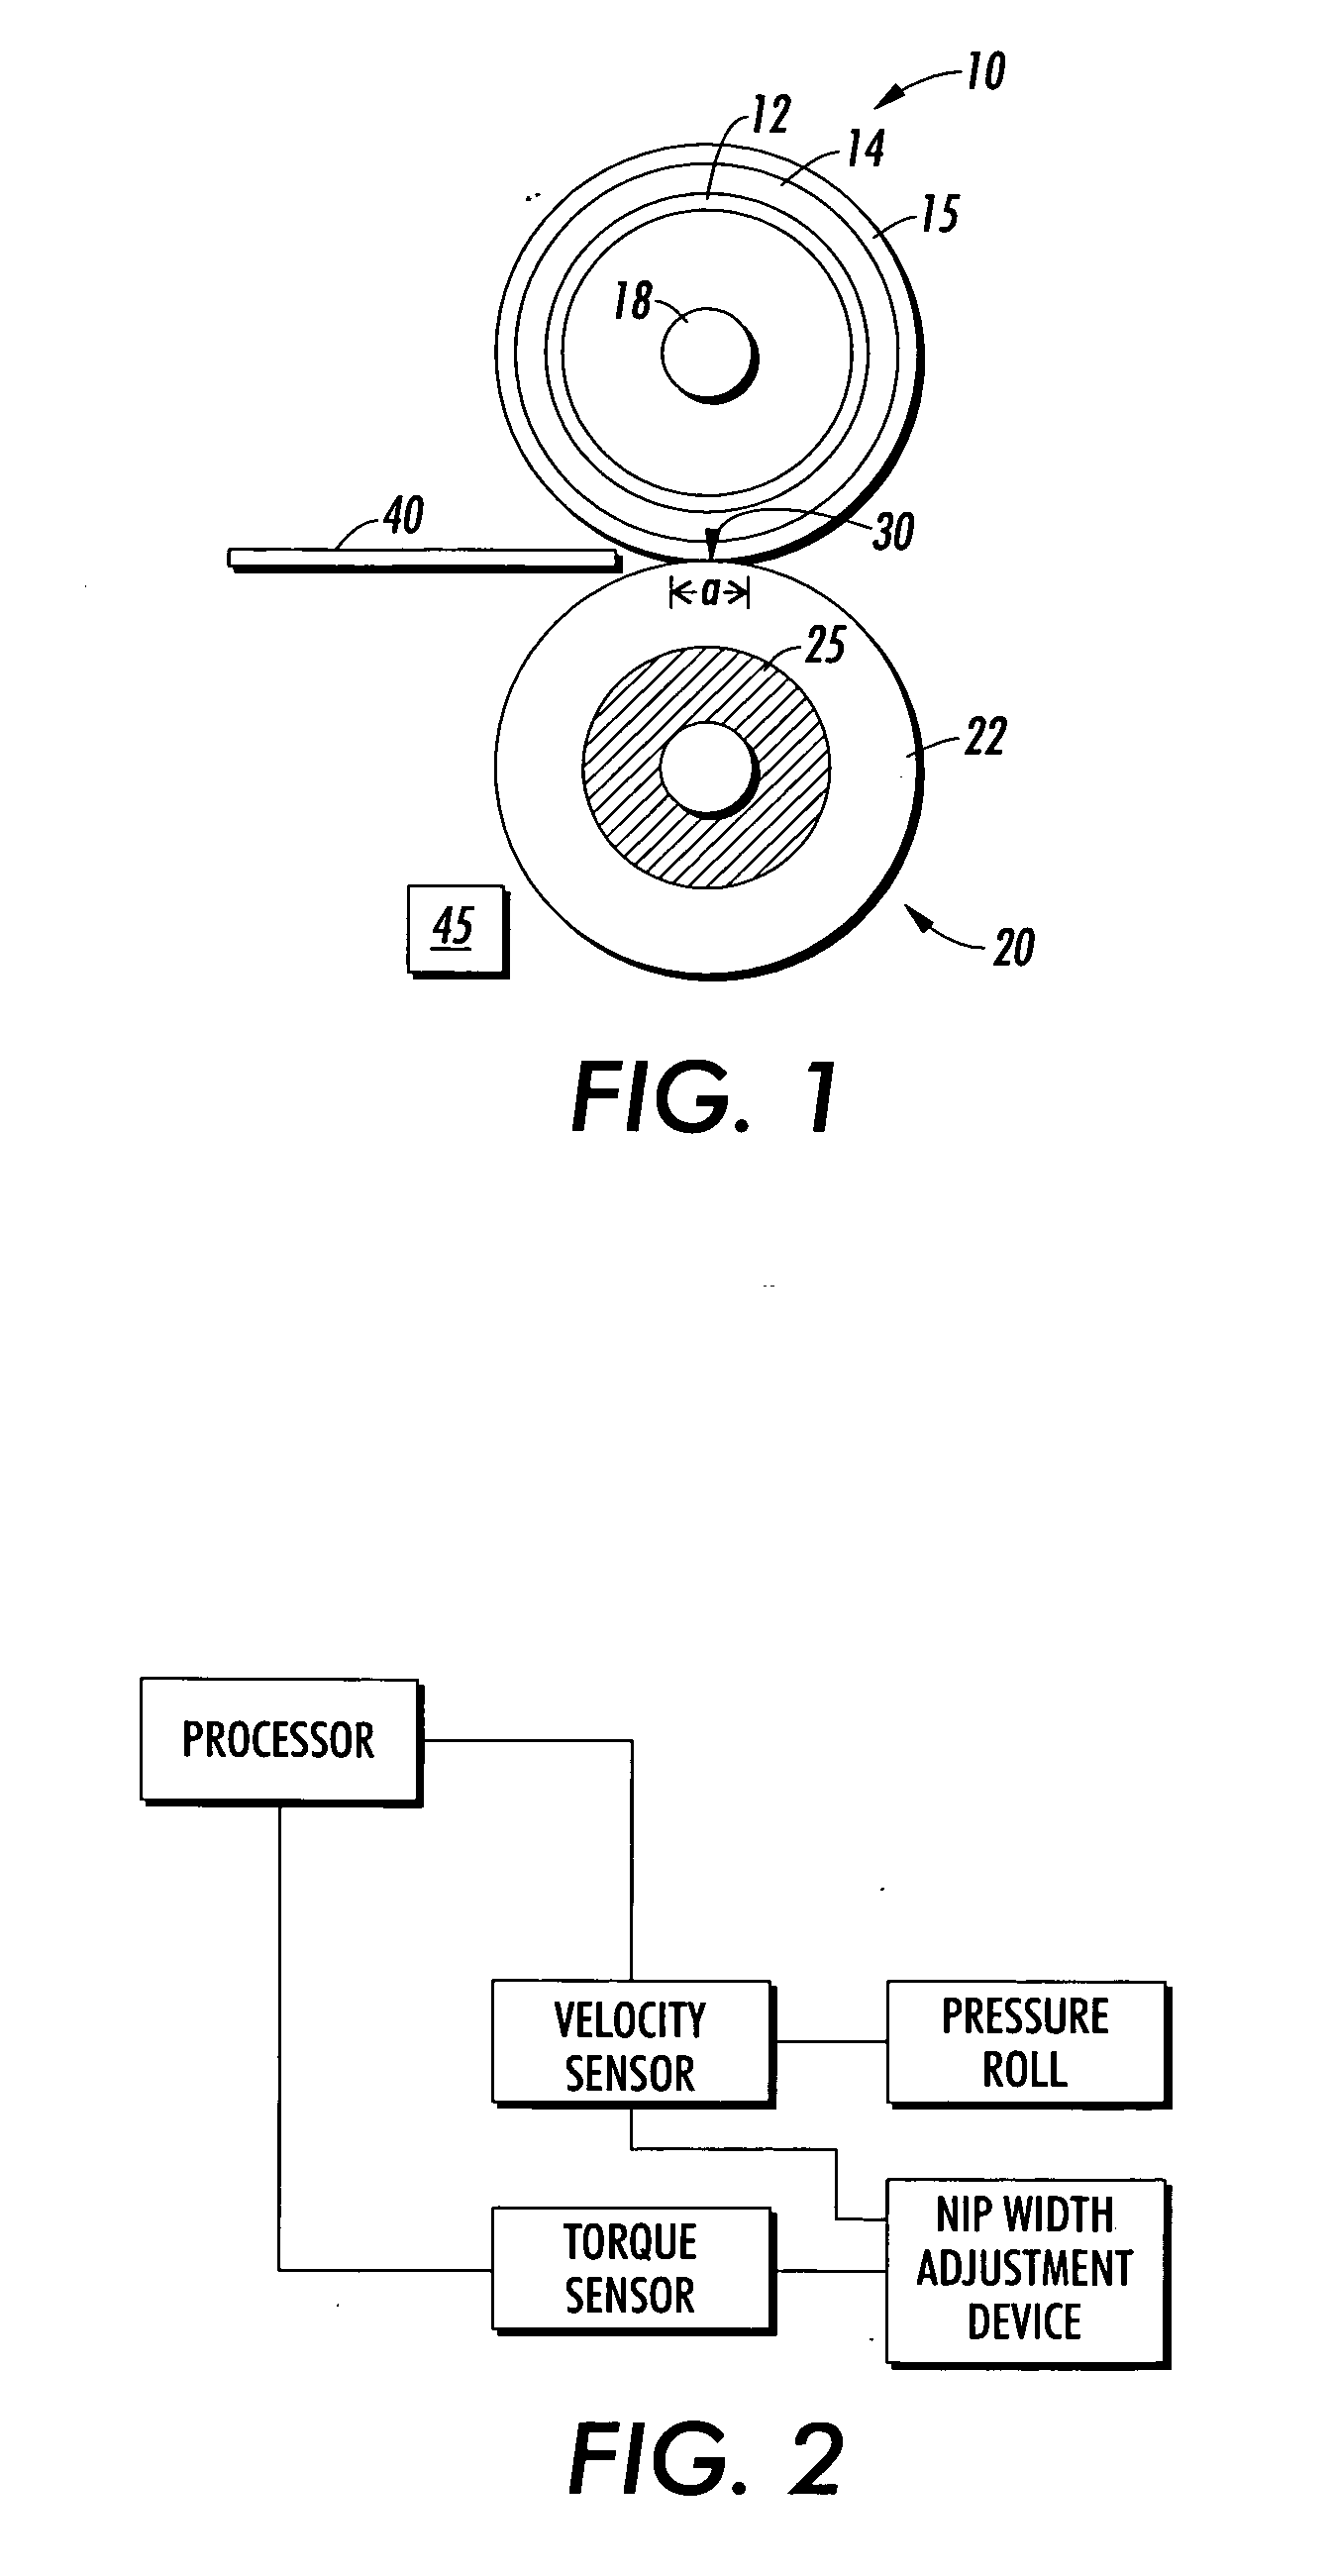 Closed loop control of nip pressure in a fuser system